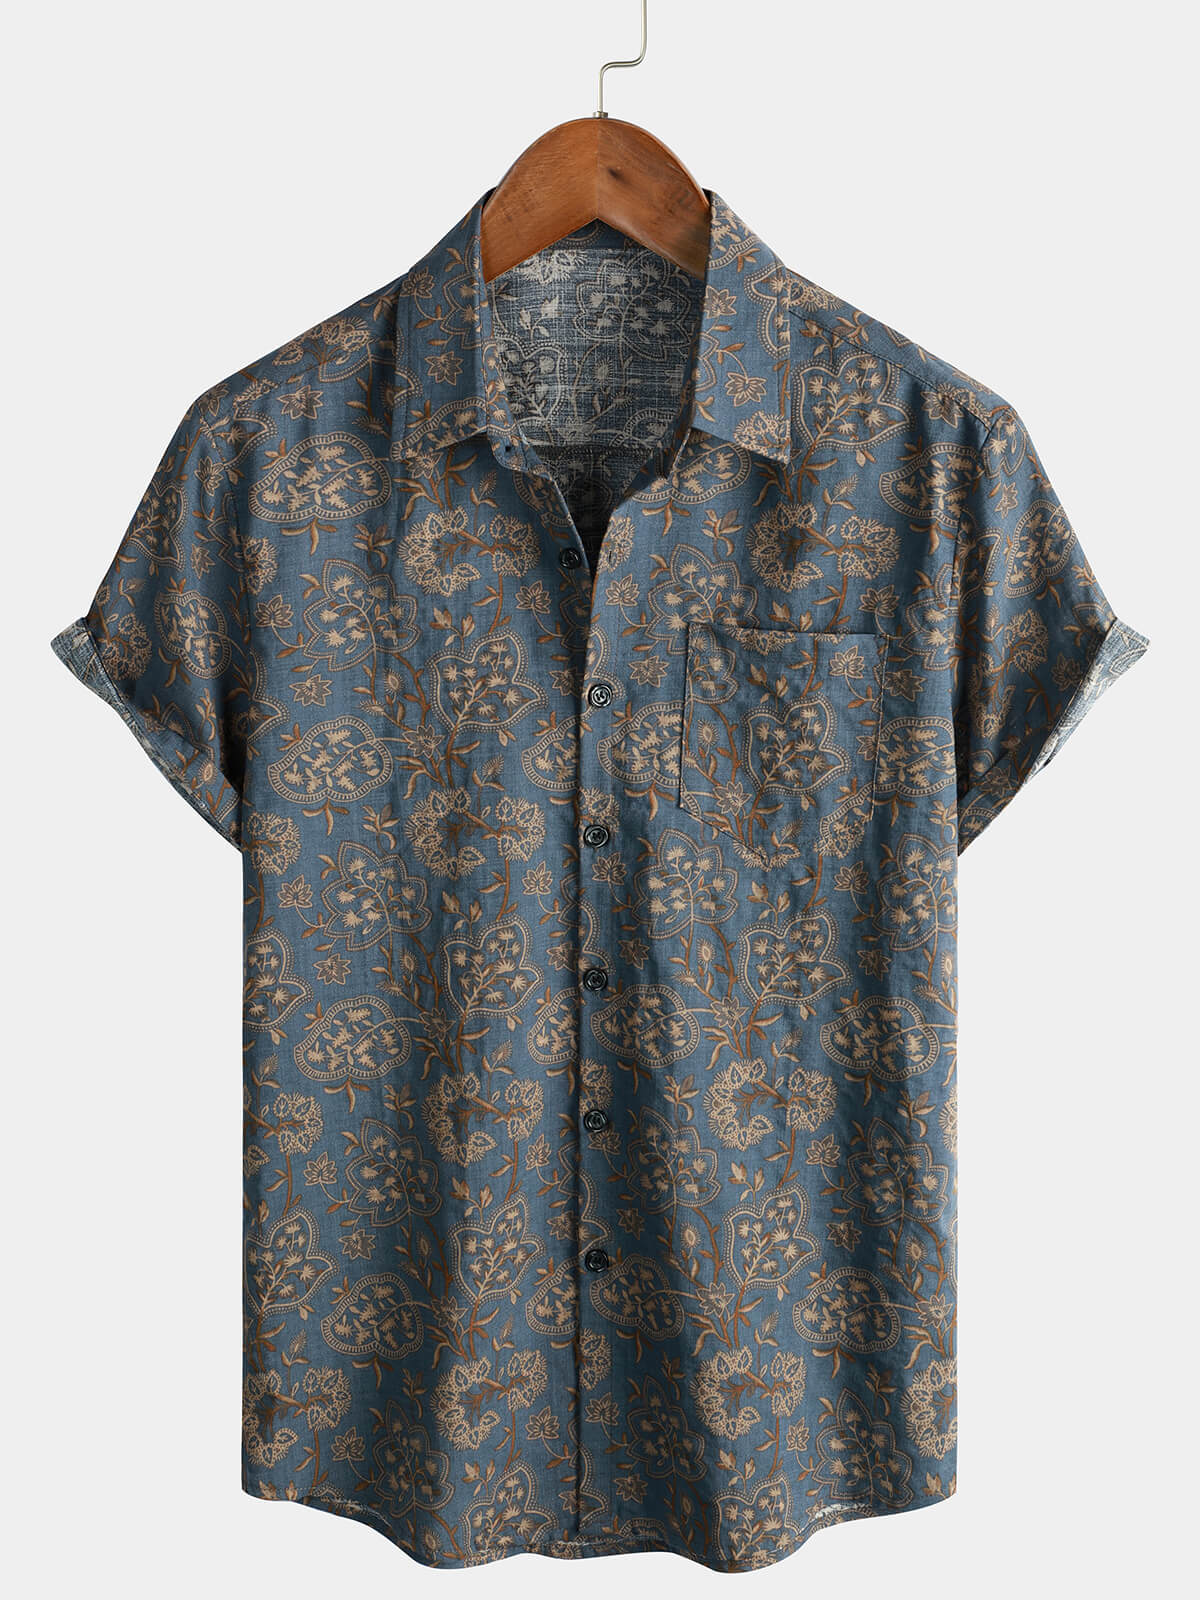 Retro Floral Print Shirt > Casual Shirt > Button Up Shirt